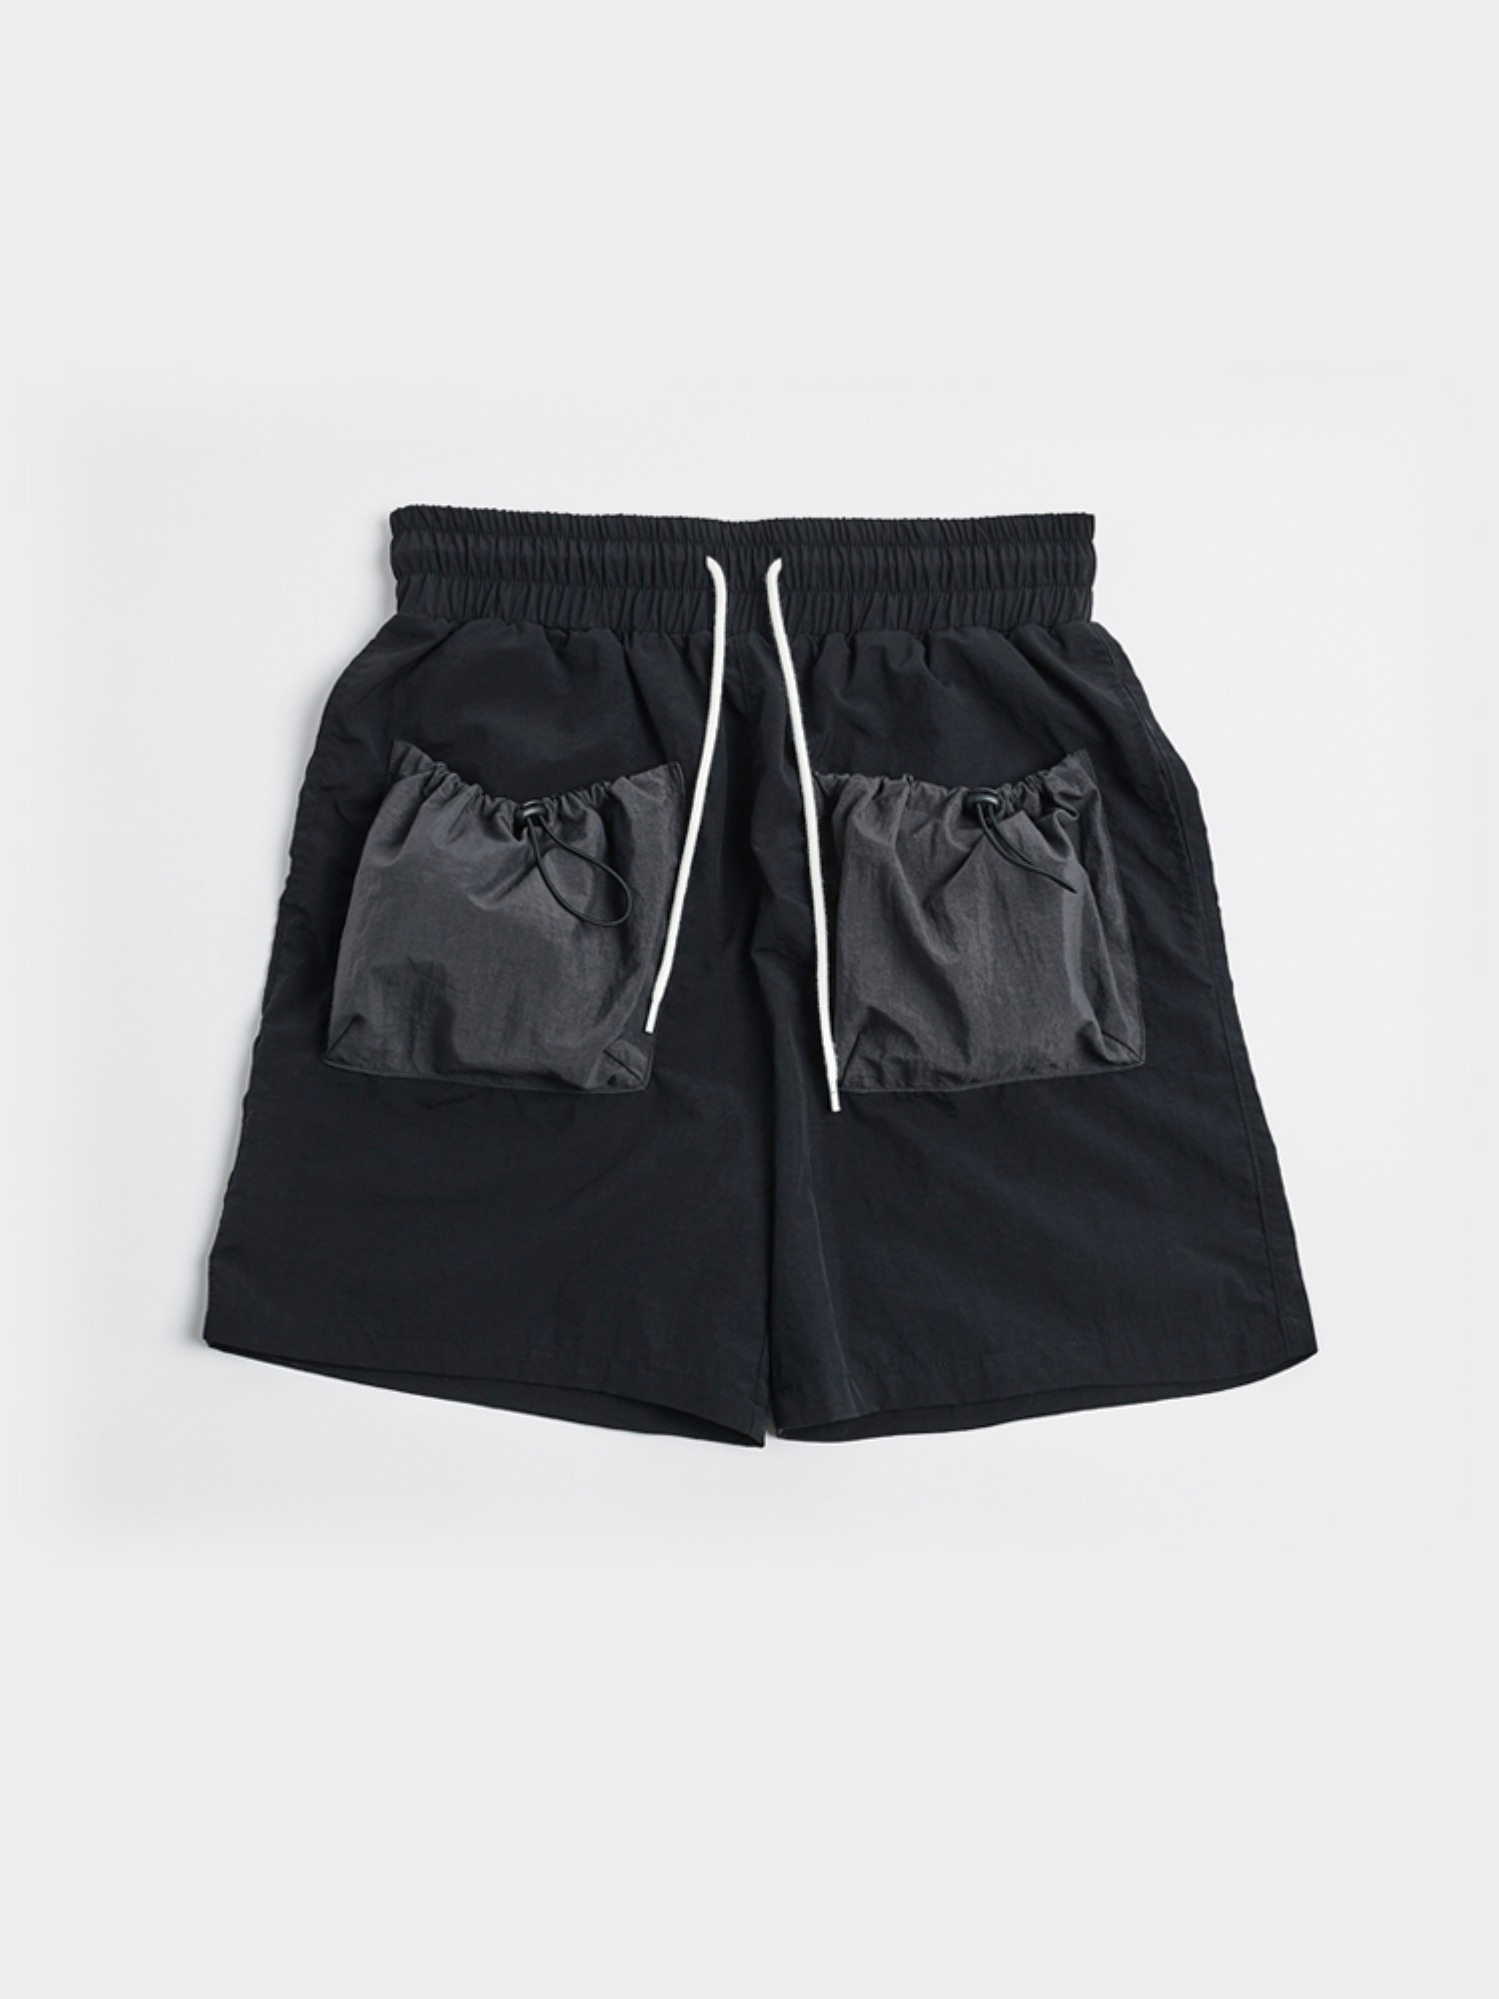 2 Pockets Shorts (Black &amp; Charcoal)